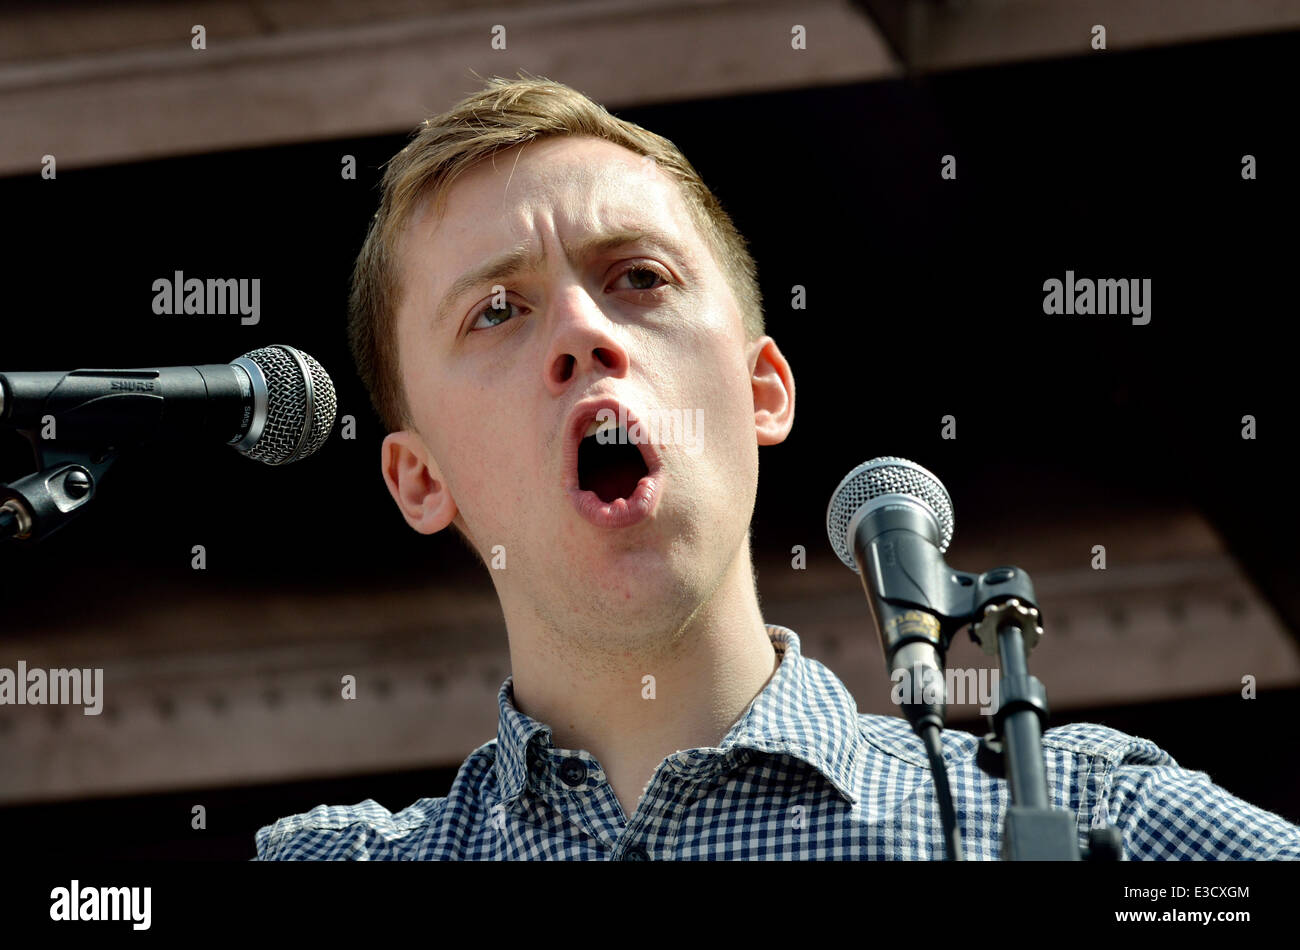 Owen Jones - British left-wing English columnist, author and commentator - speaking in Parliament Square, 21st June 2014 Stock Photo